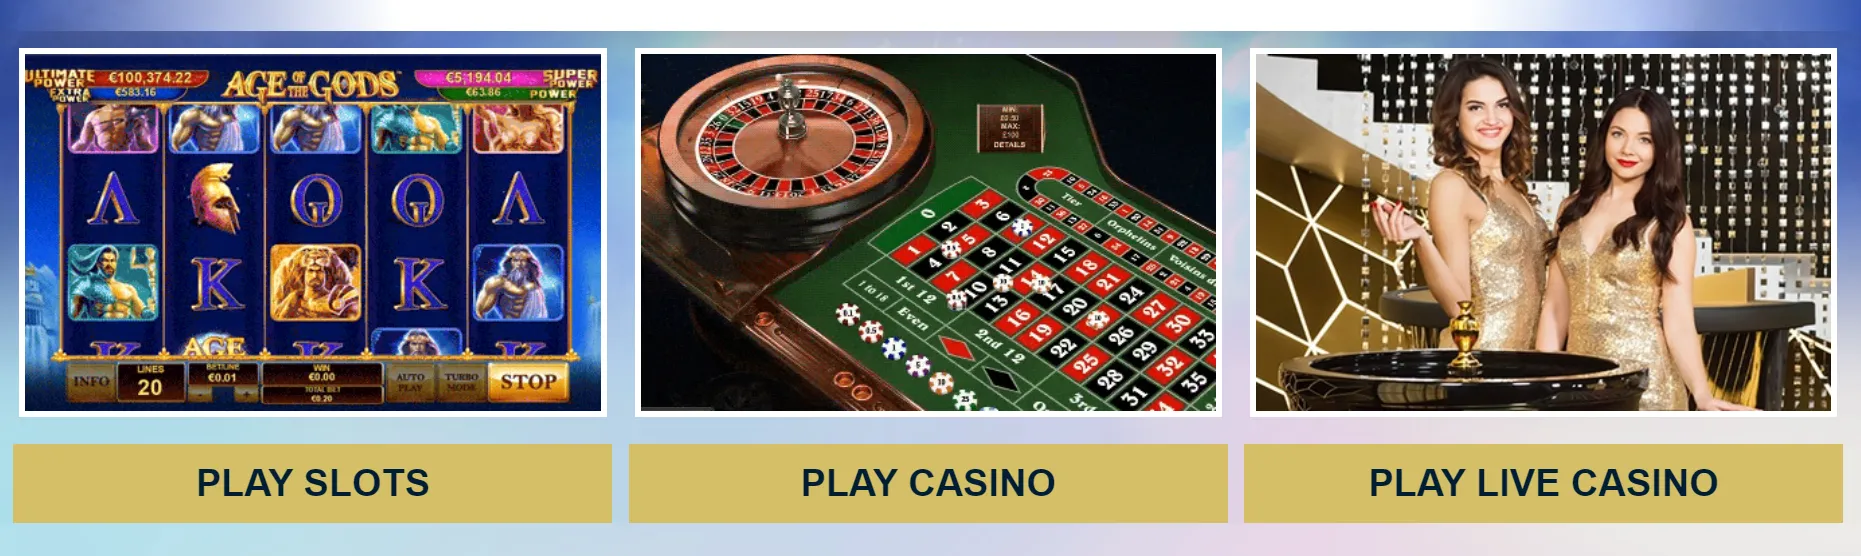 Europa casino juegos